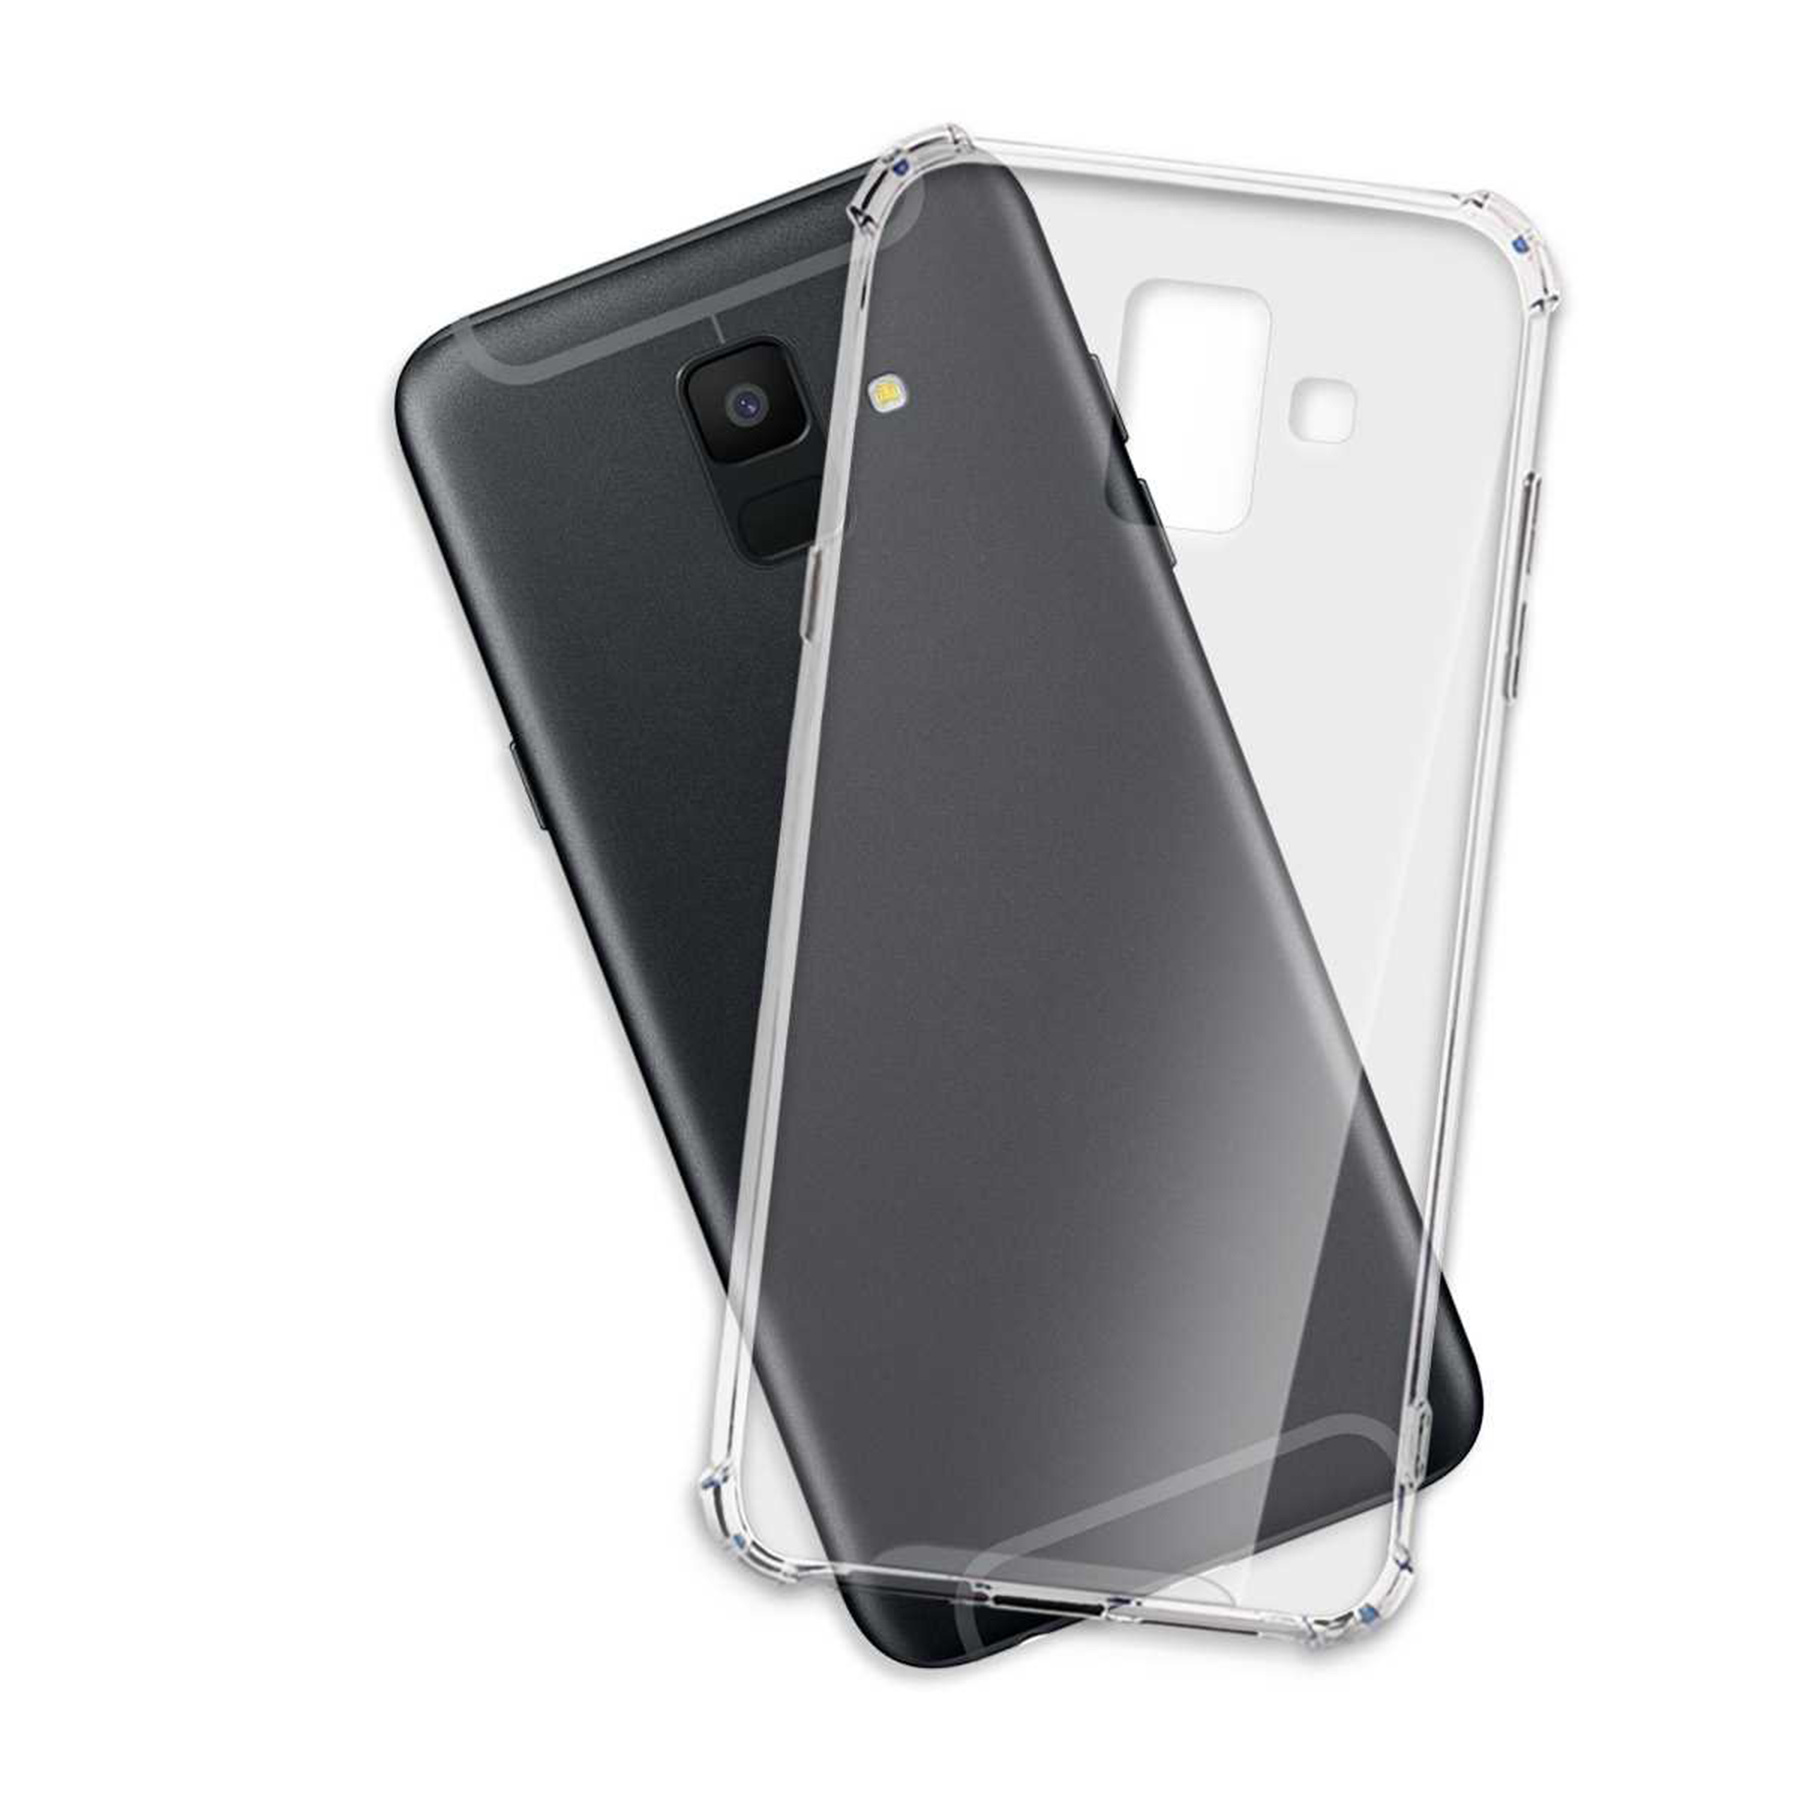 MTB MORE Samsung, Galaxy ENERGY A6 Armor Clear Backcover, 2018, Transparent Case